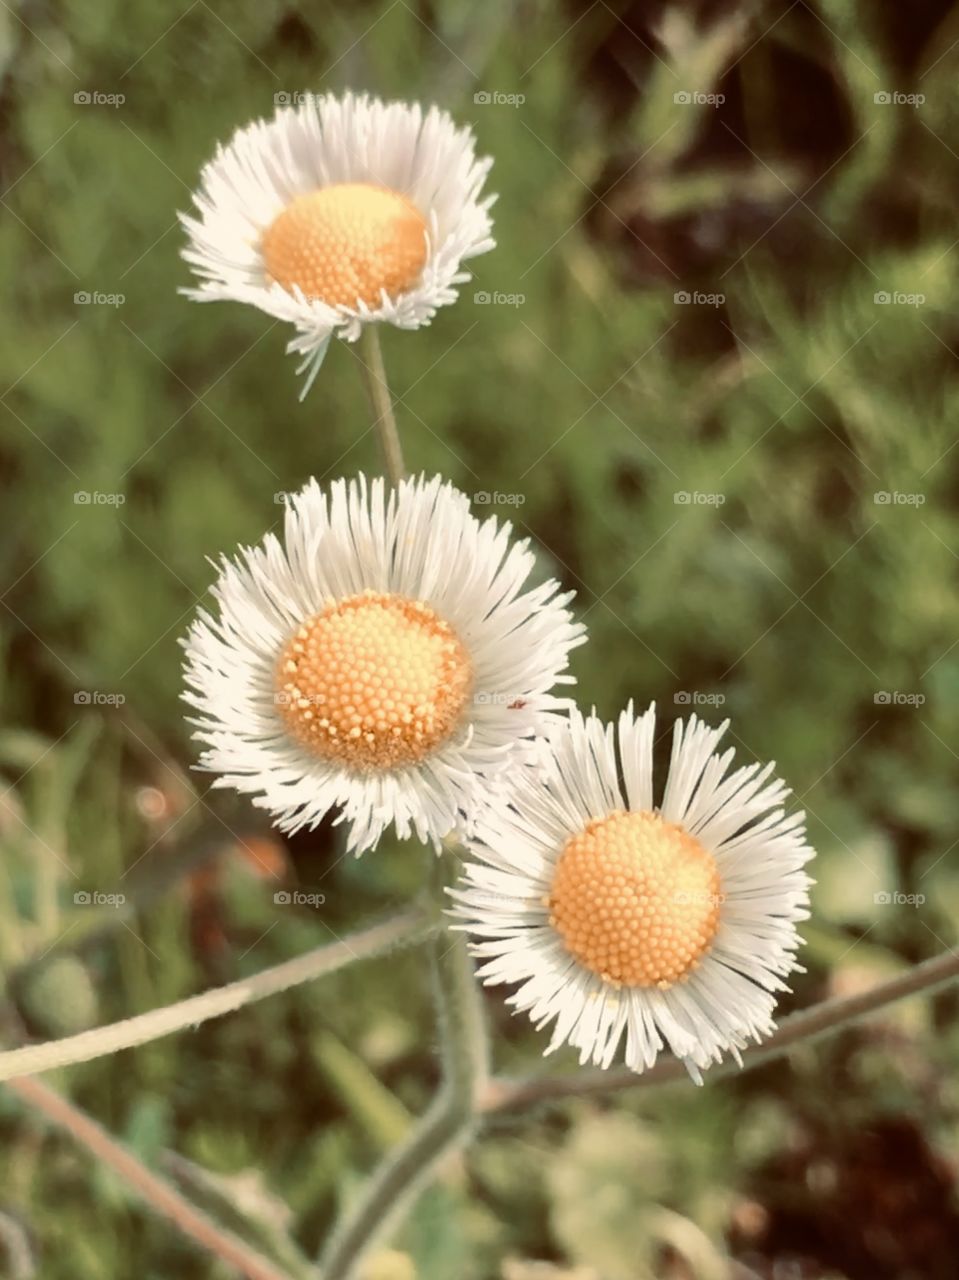 Little white daisy looking flowers 